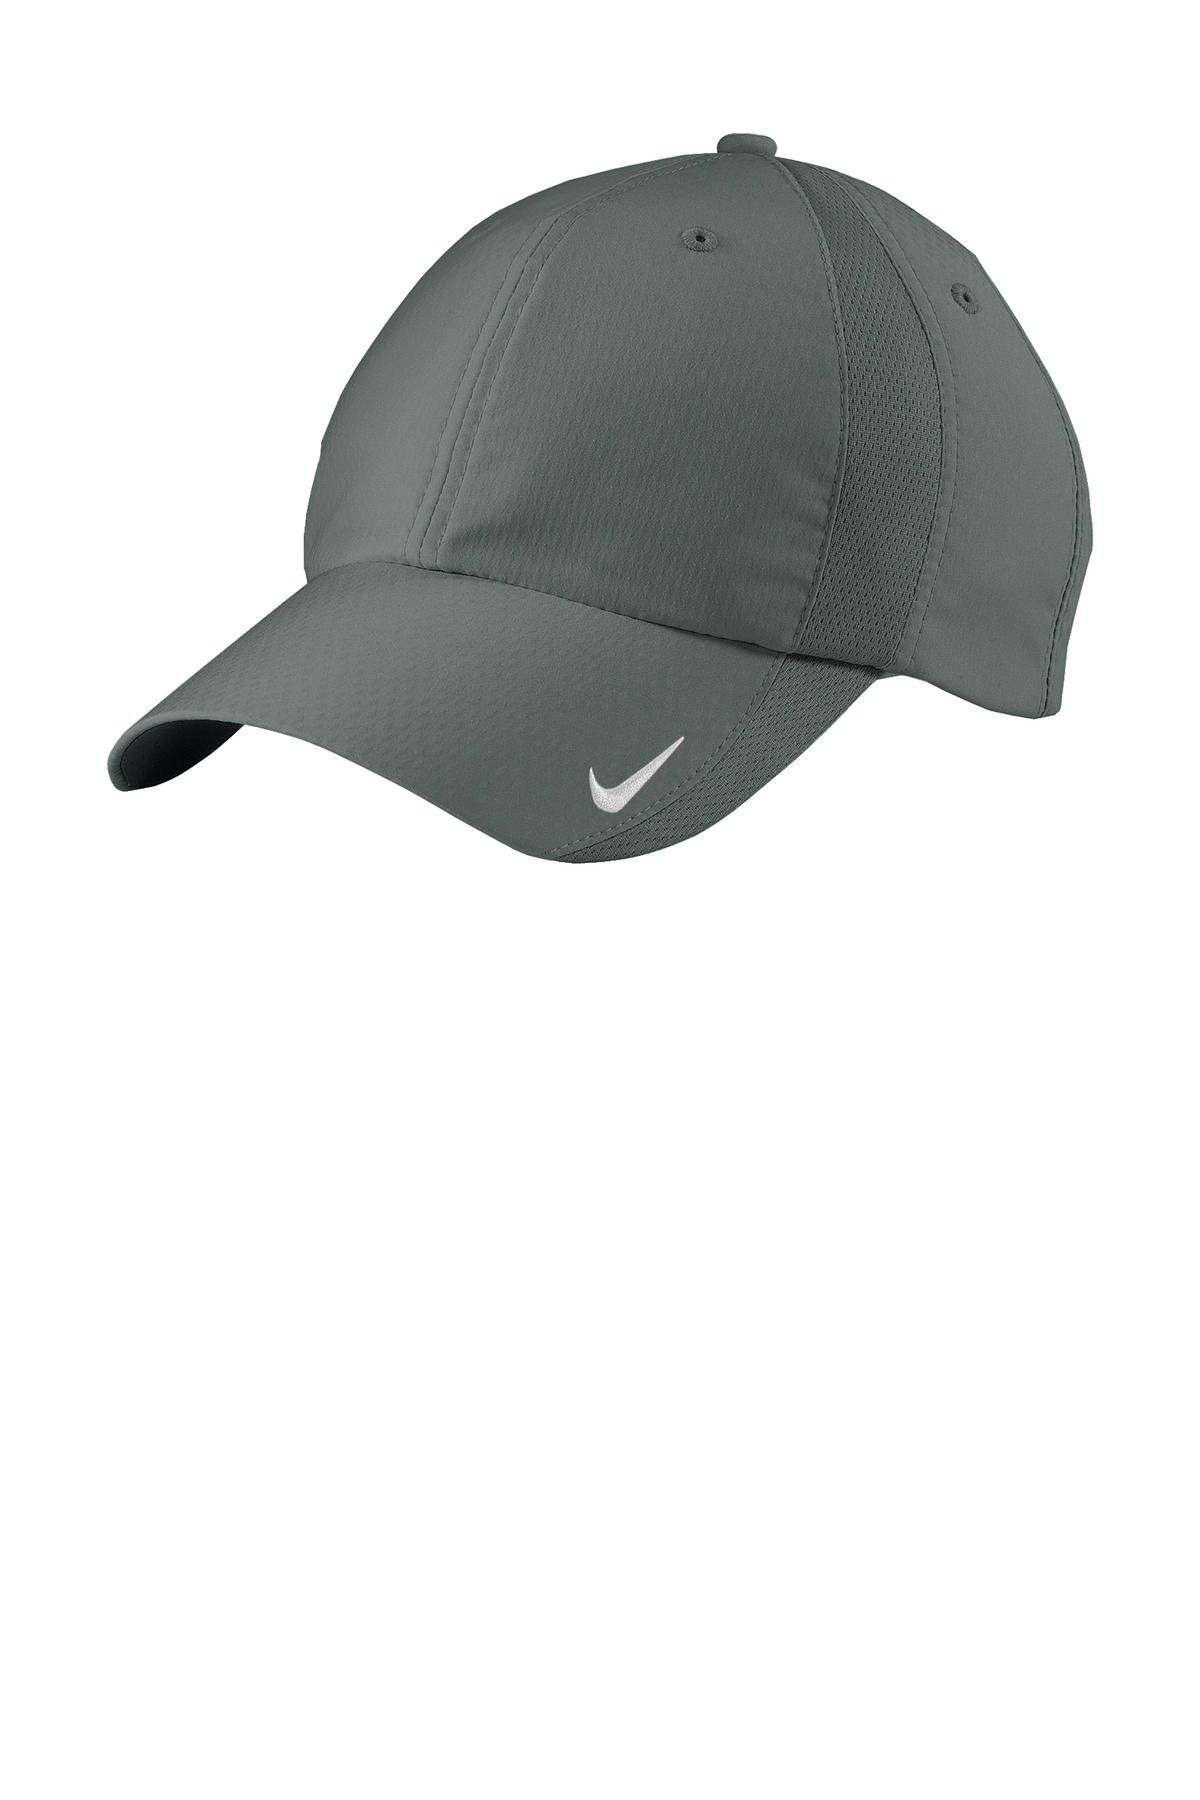 Nike Sphere Performance Cap-Nike